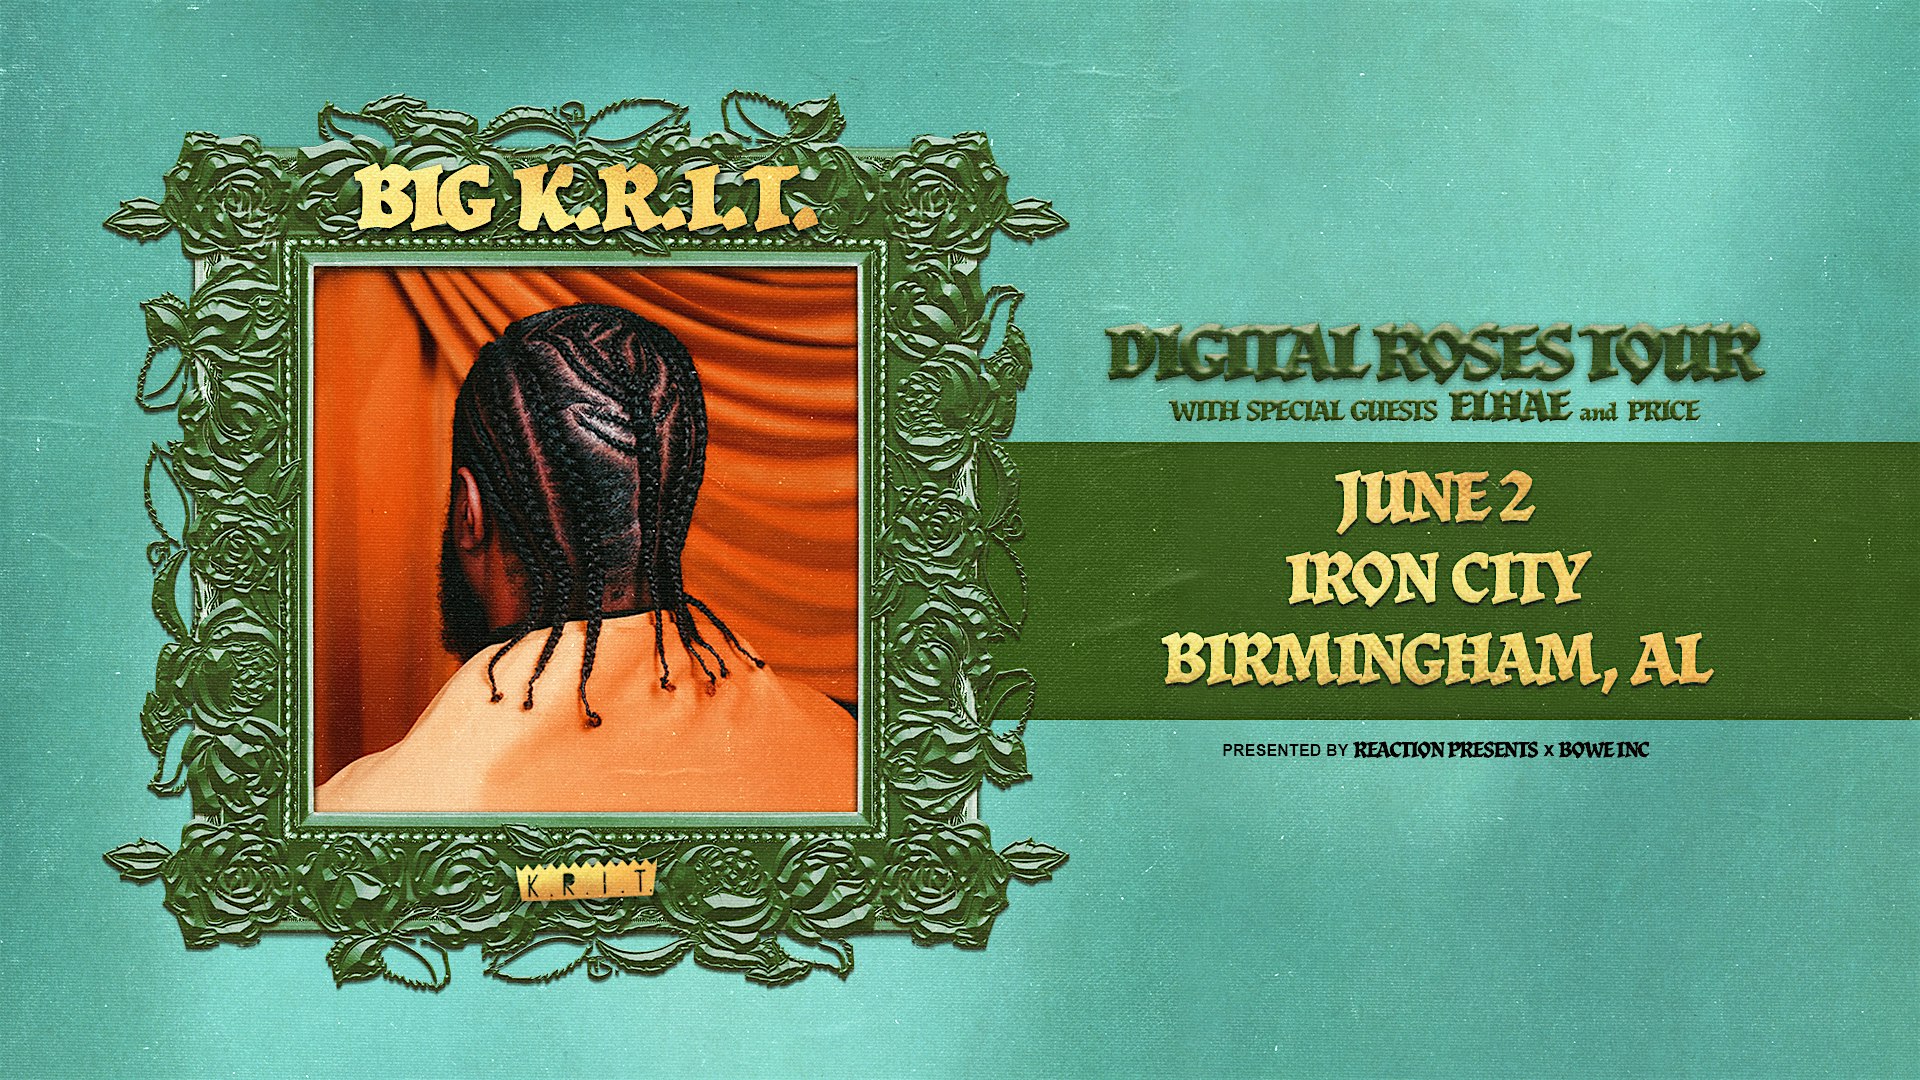 Big K.R.I.T. Digital Roses Tour